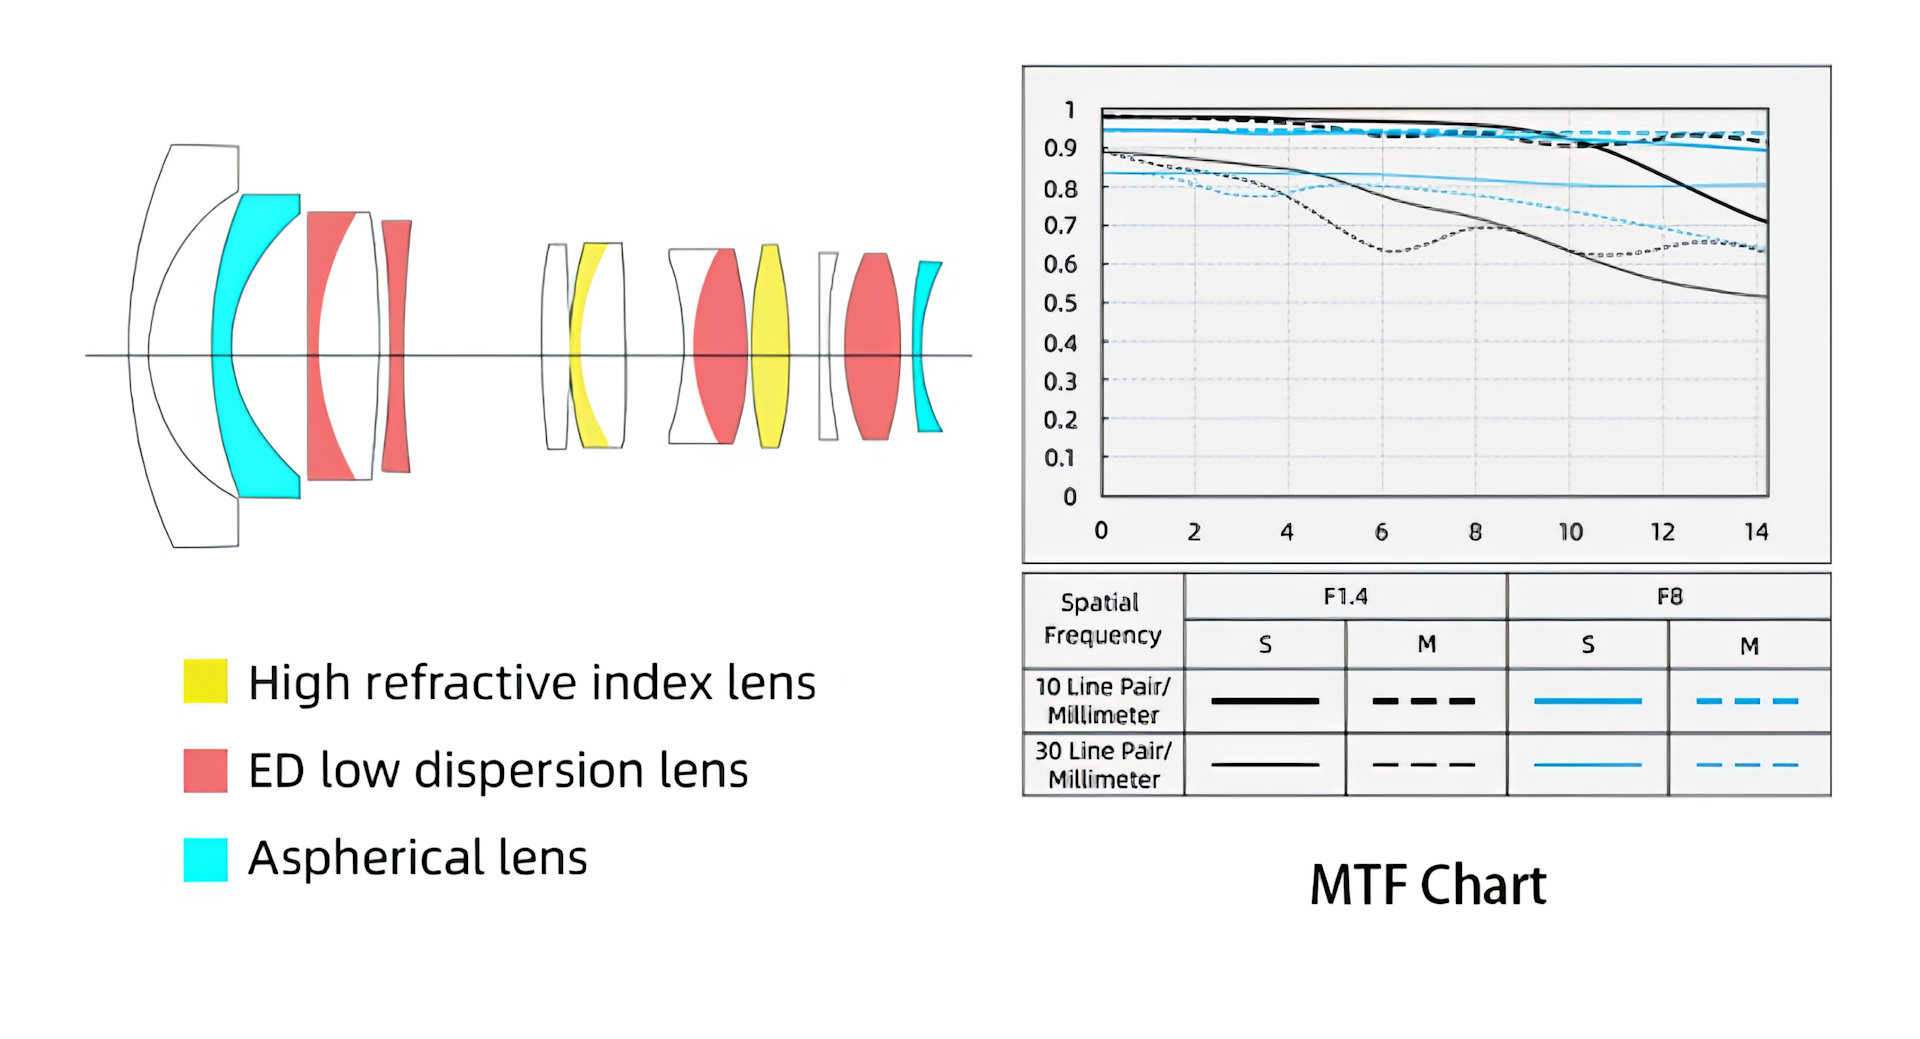 Viltrox 13mm f1.4 lens optical construction and MFT chart